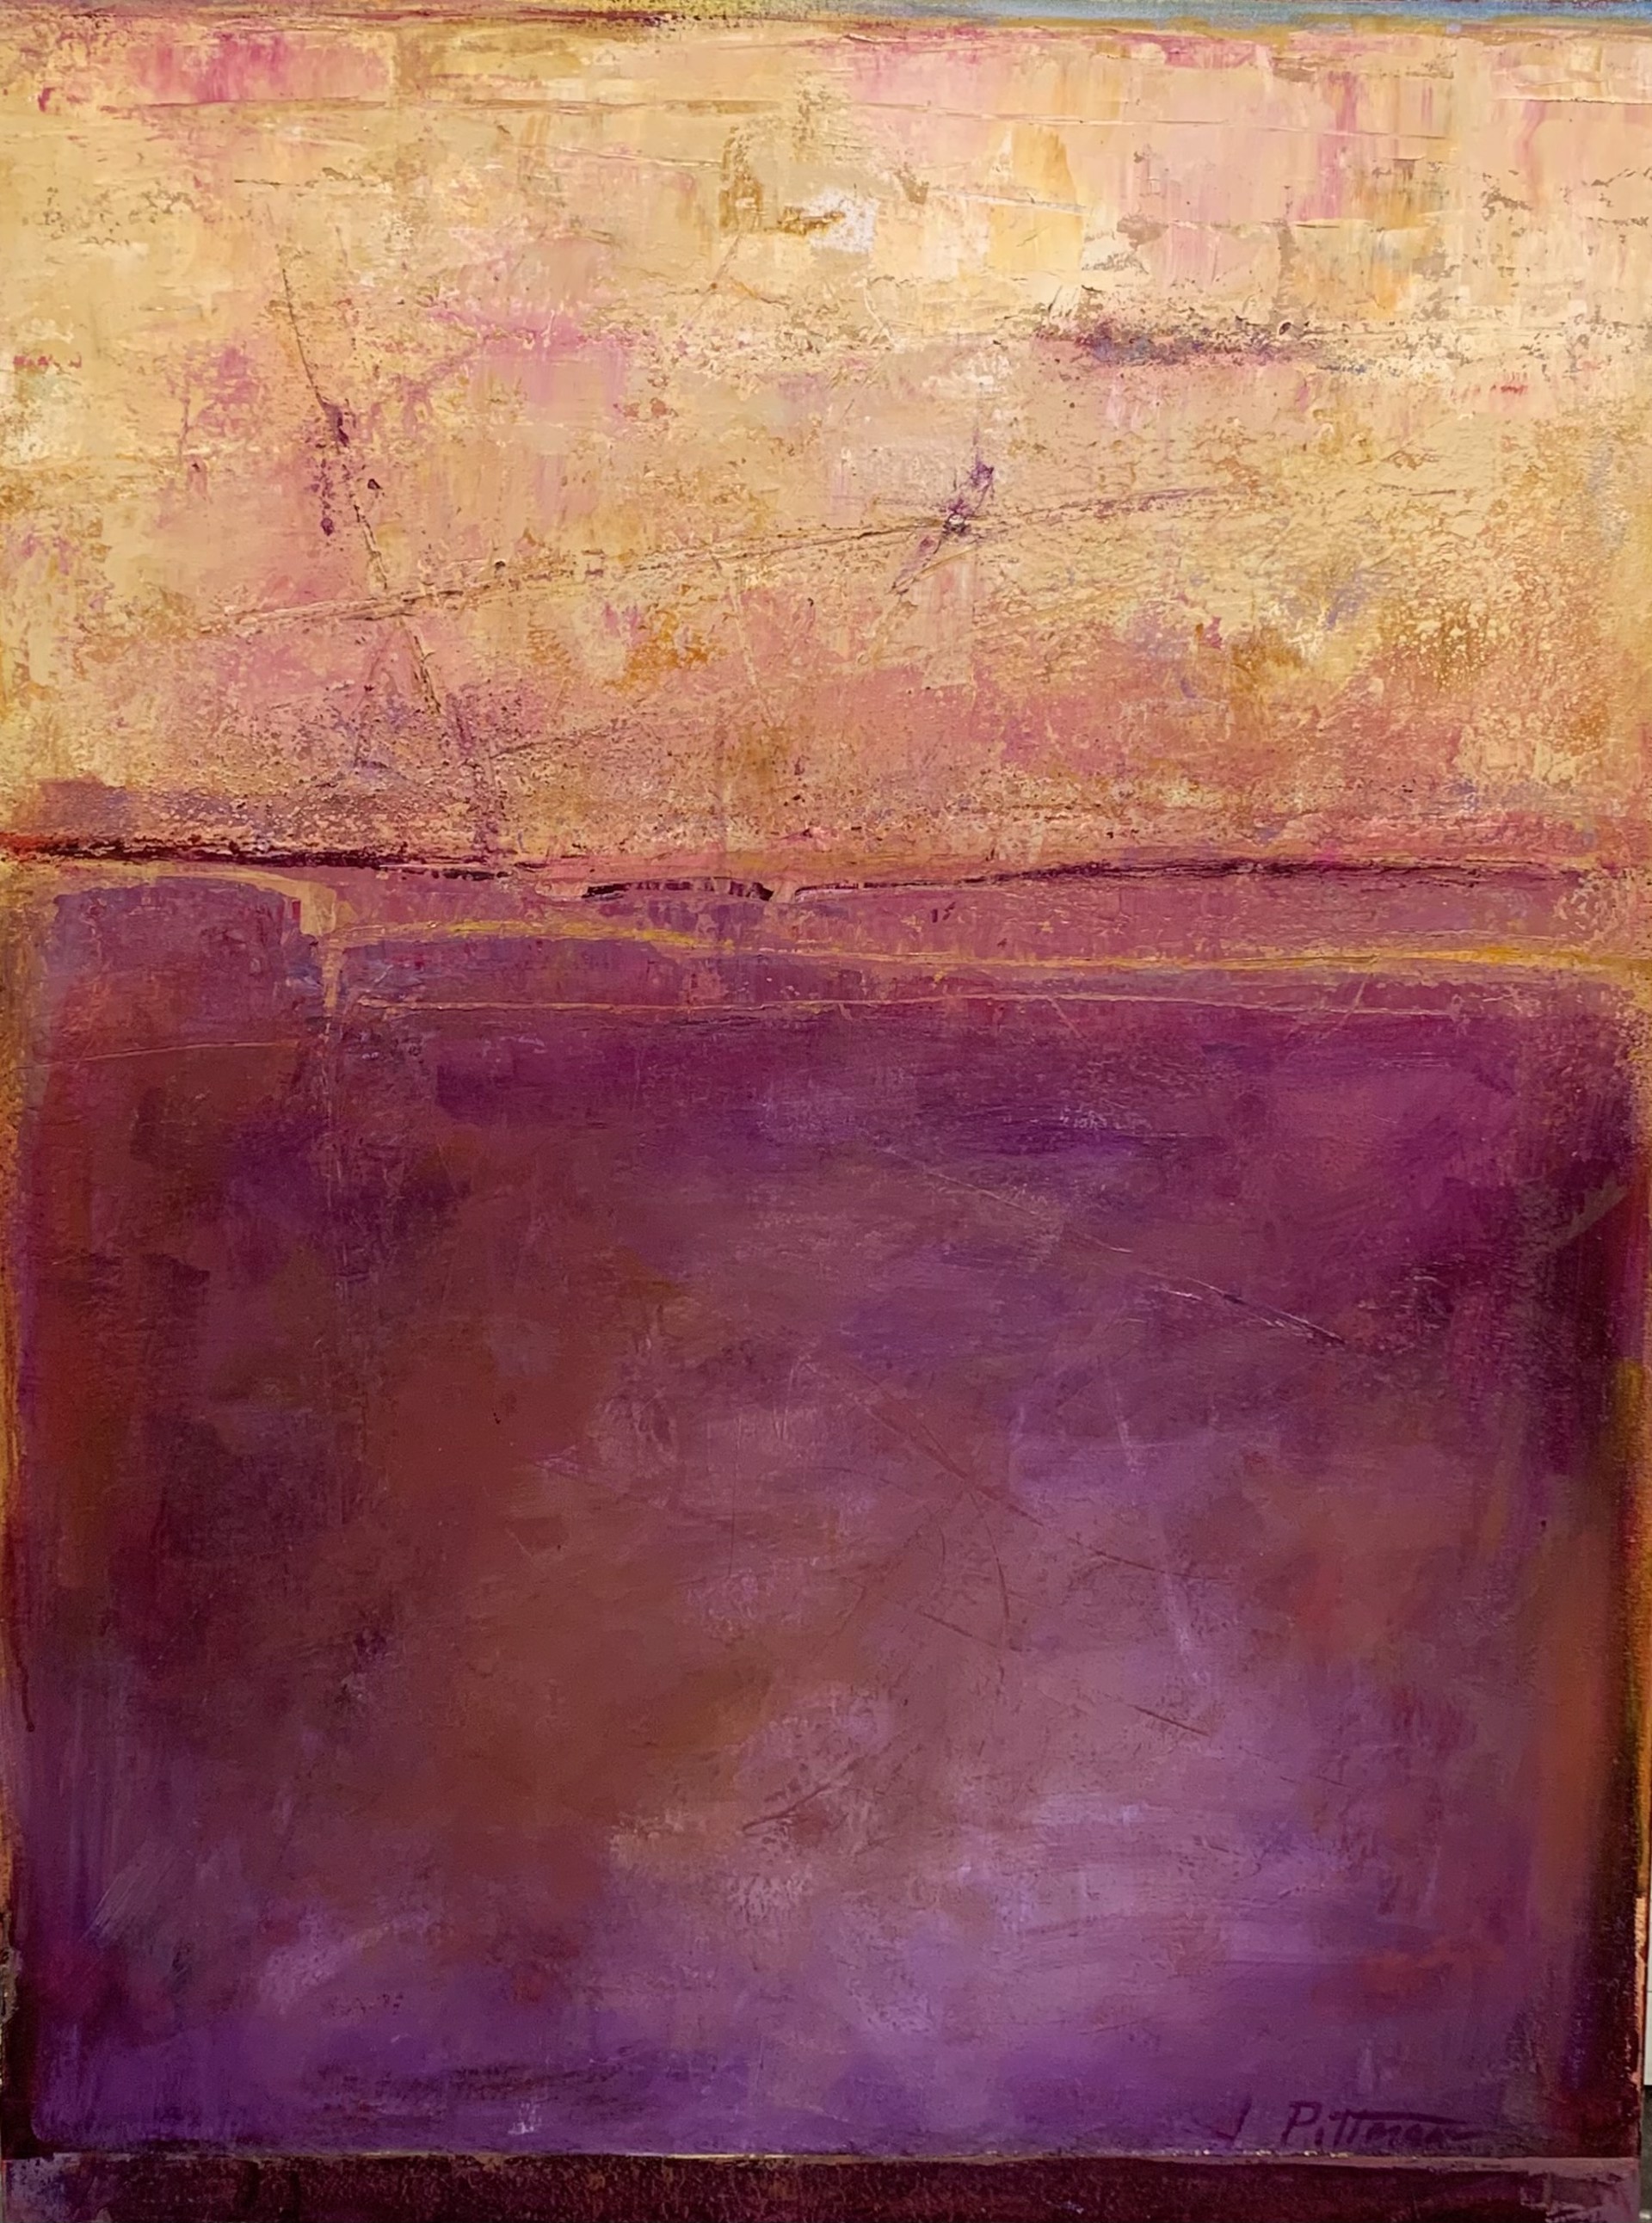 Lavender Fields - Commission - Bradey by Jim Pittman